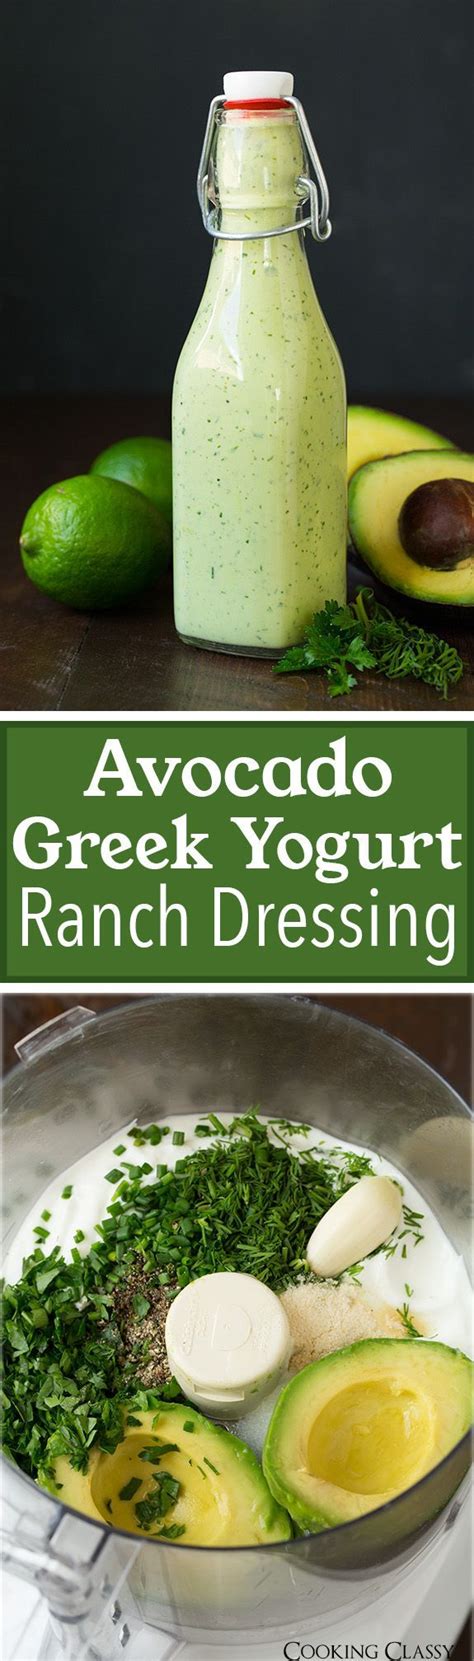 Avocado Greek Yogurt Ranch Dressing Cooking Classy Avocado Recipes